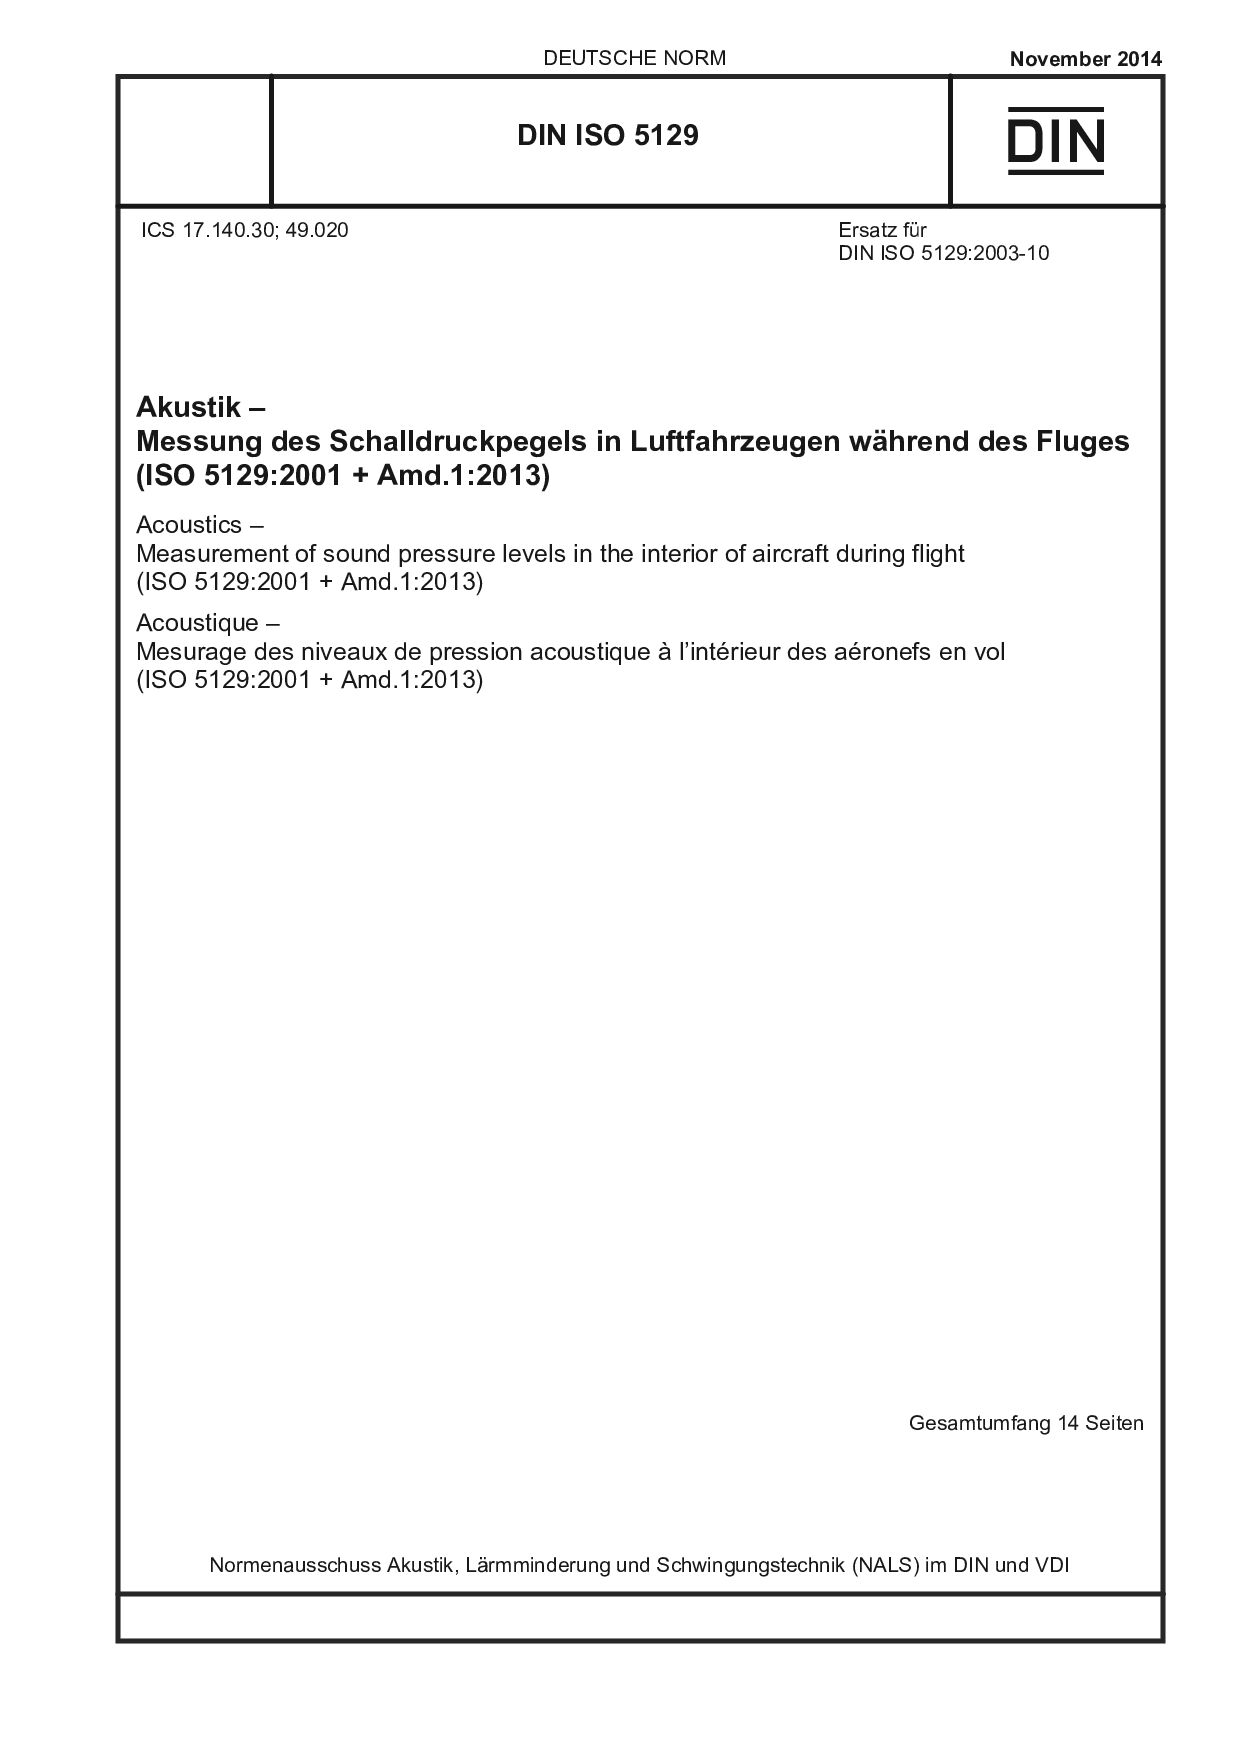 DIN ISO 5129:2014-11